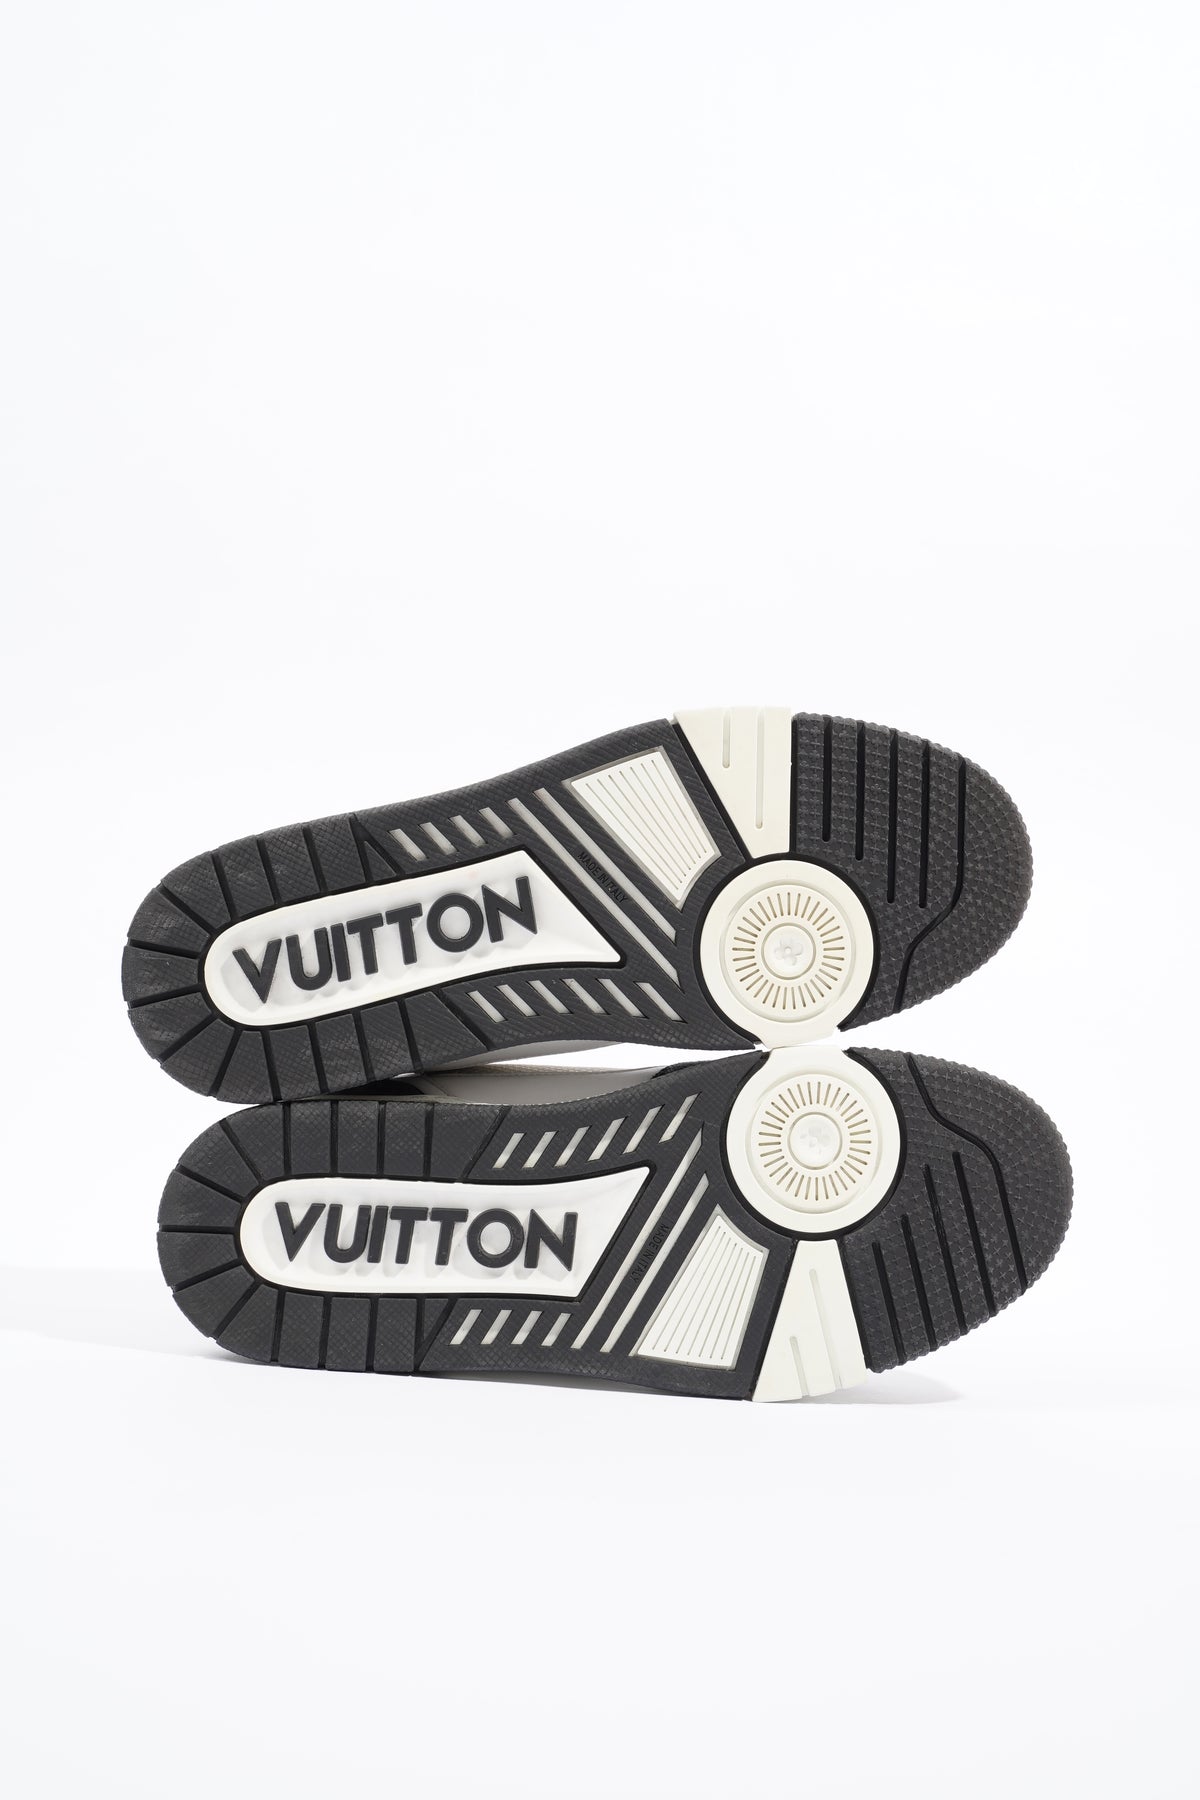 Louis Vuitton LV Trainer Velcro Strap Denim Black White Sneakers